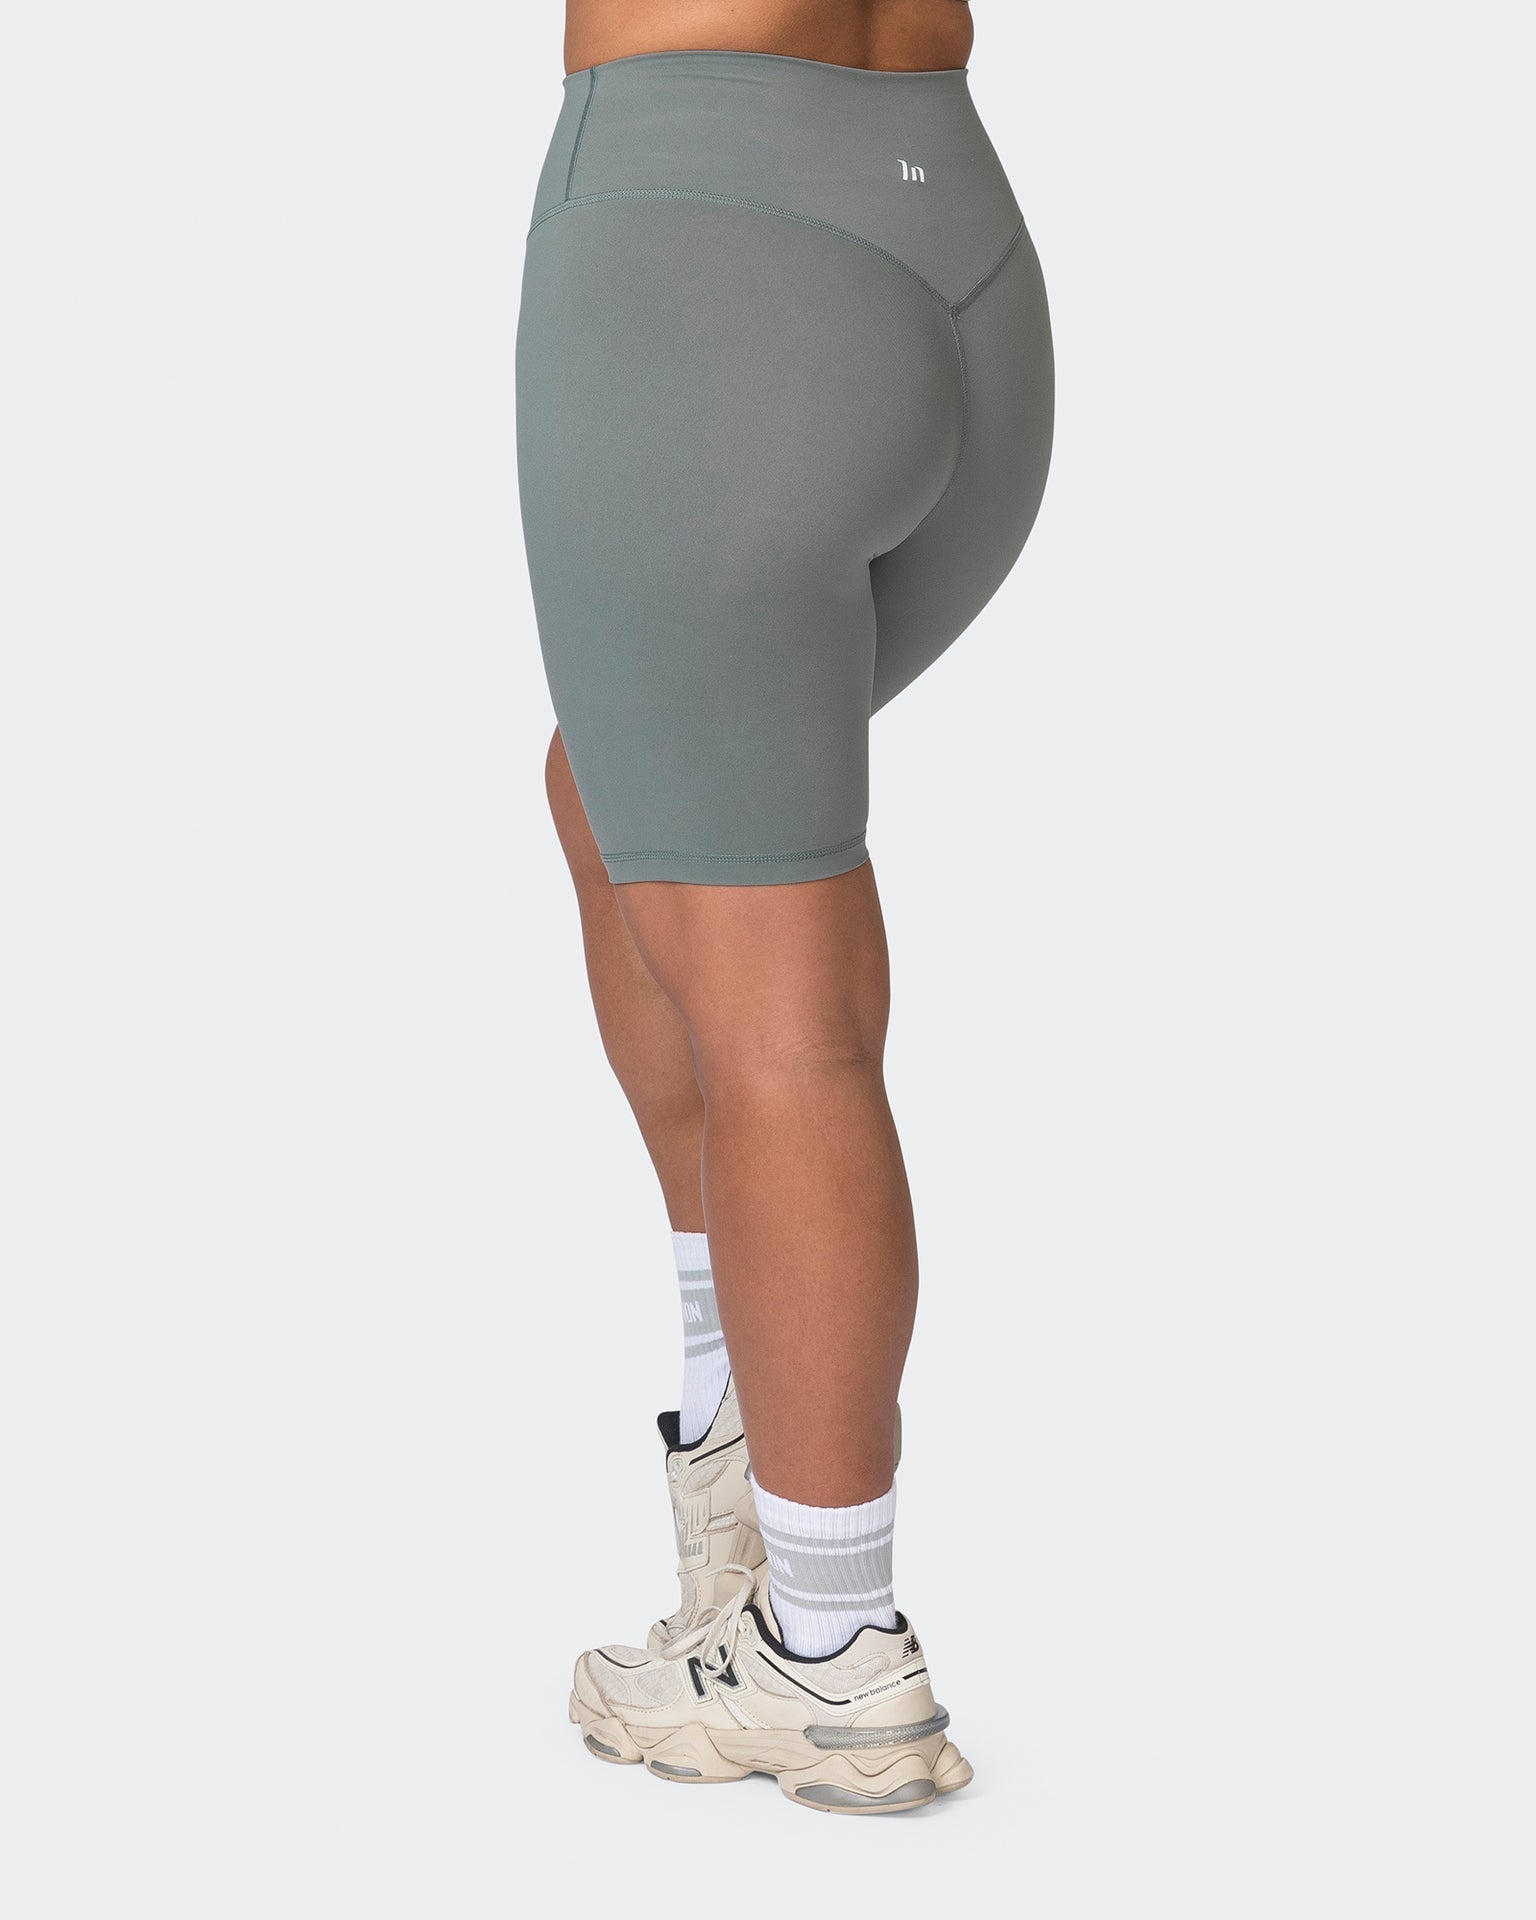 Muscle Nation Bike Shorts Ultra Signature Referee Length Shorts - Botanica